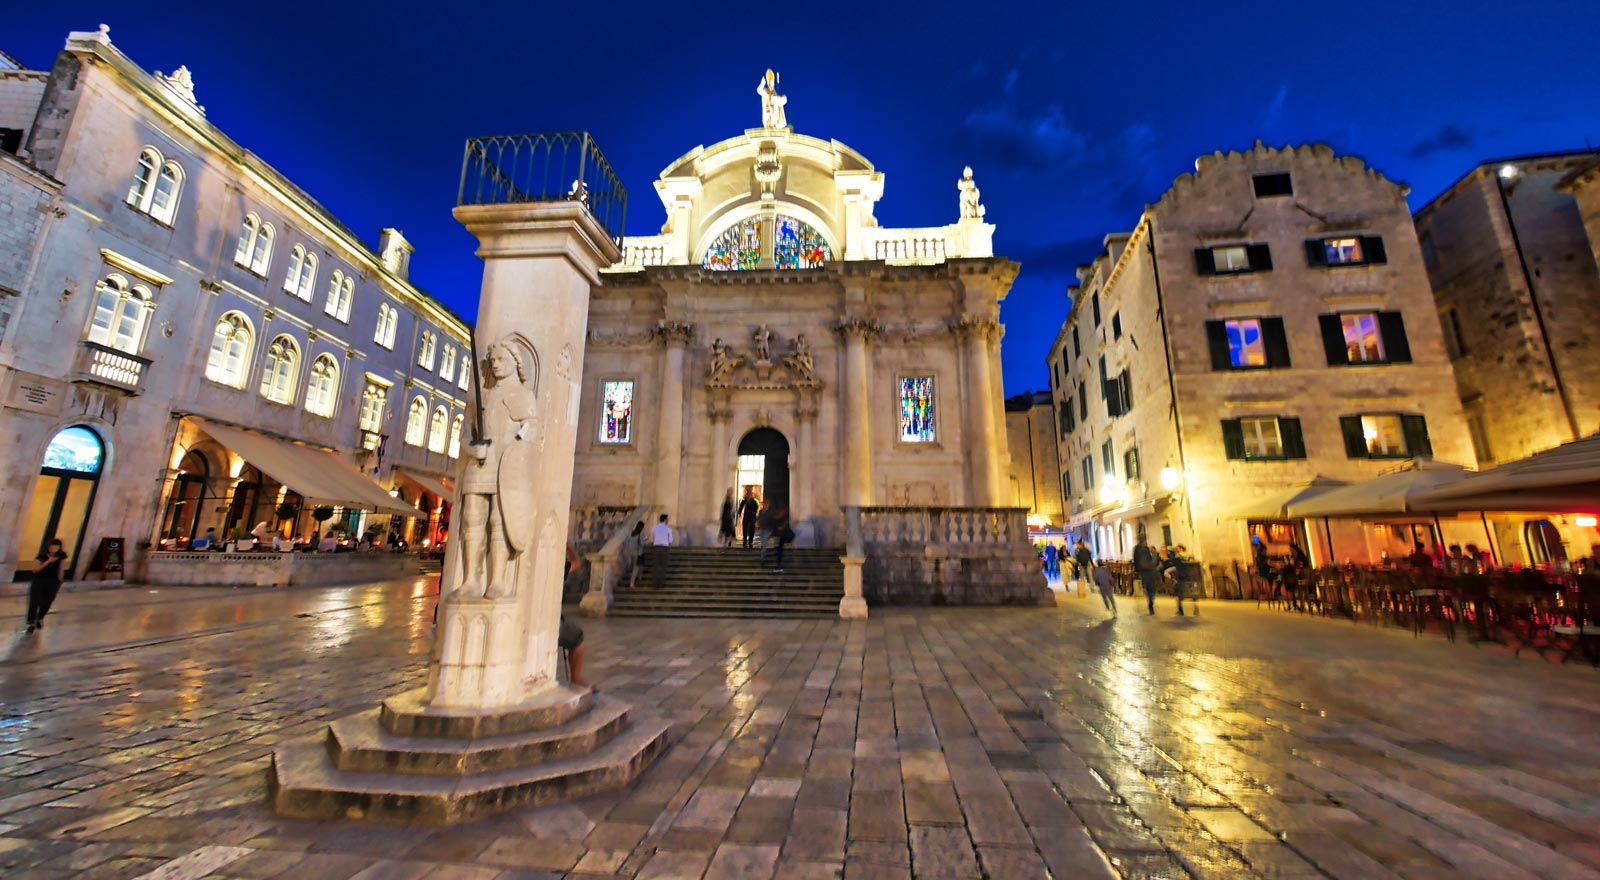 St Blaise Church in Dubrovnik